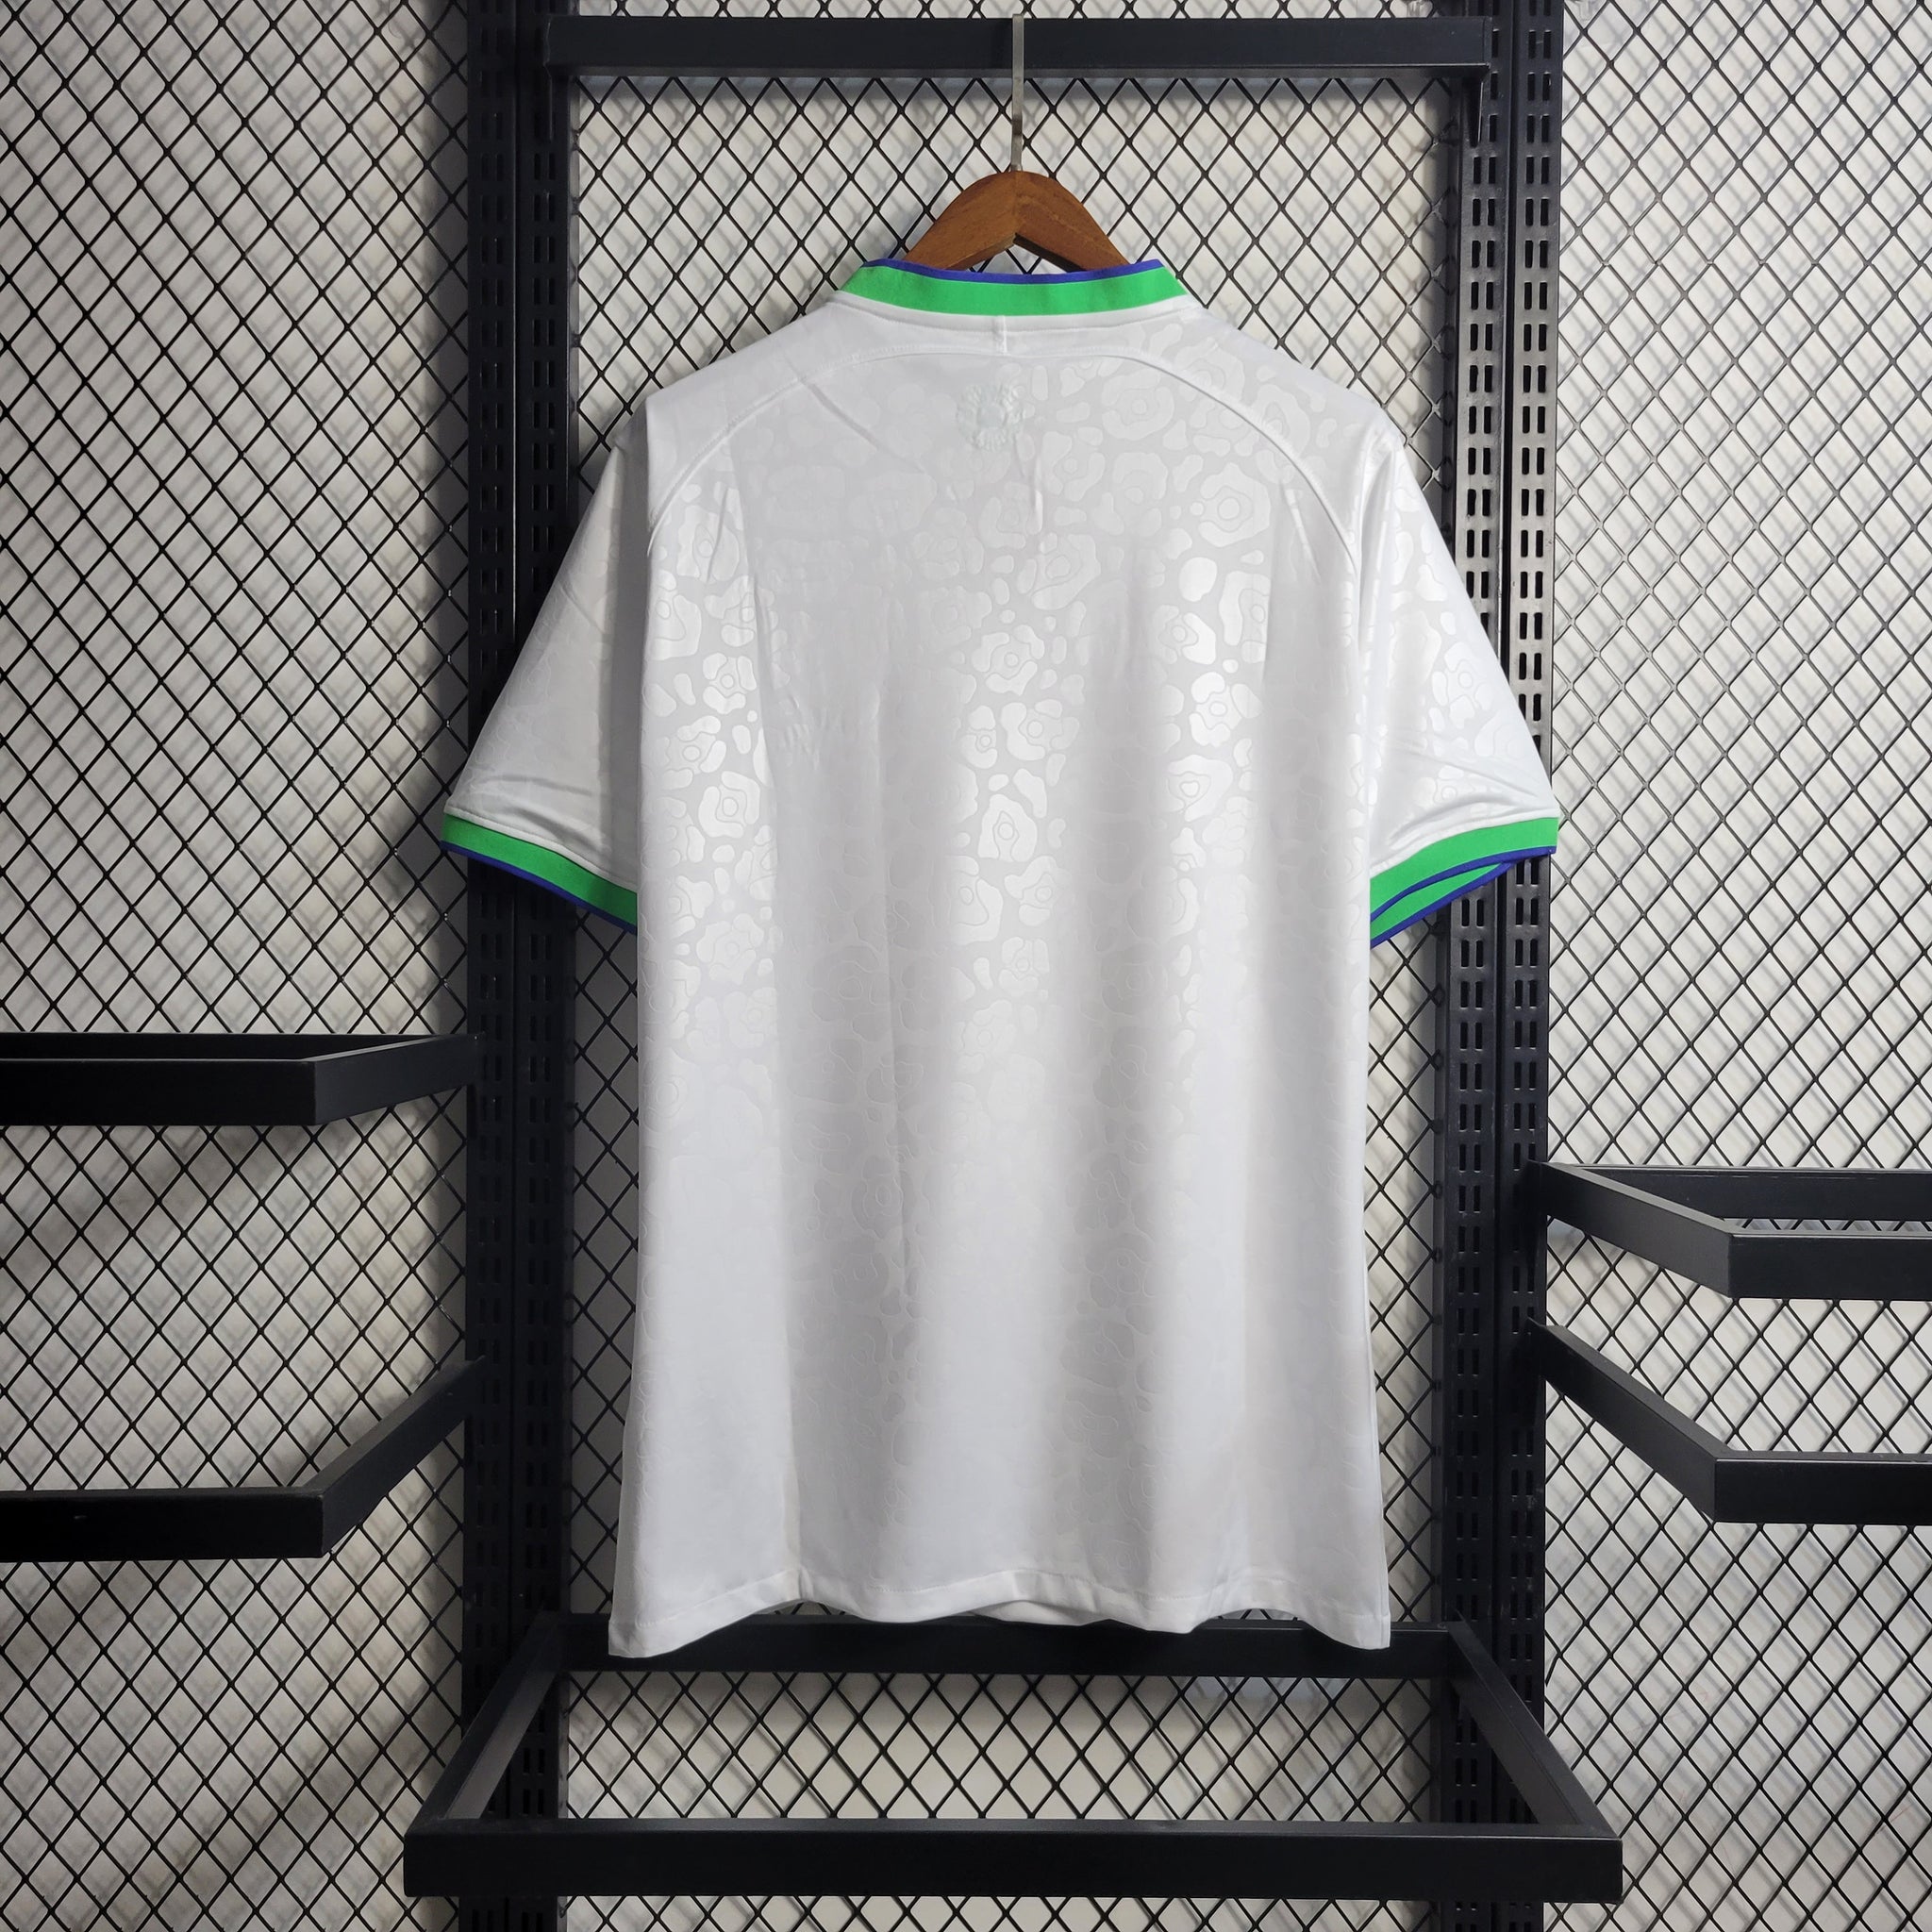 Camiseta Brasil Estampa Branca - Compre Agora